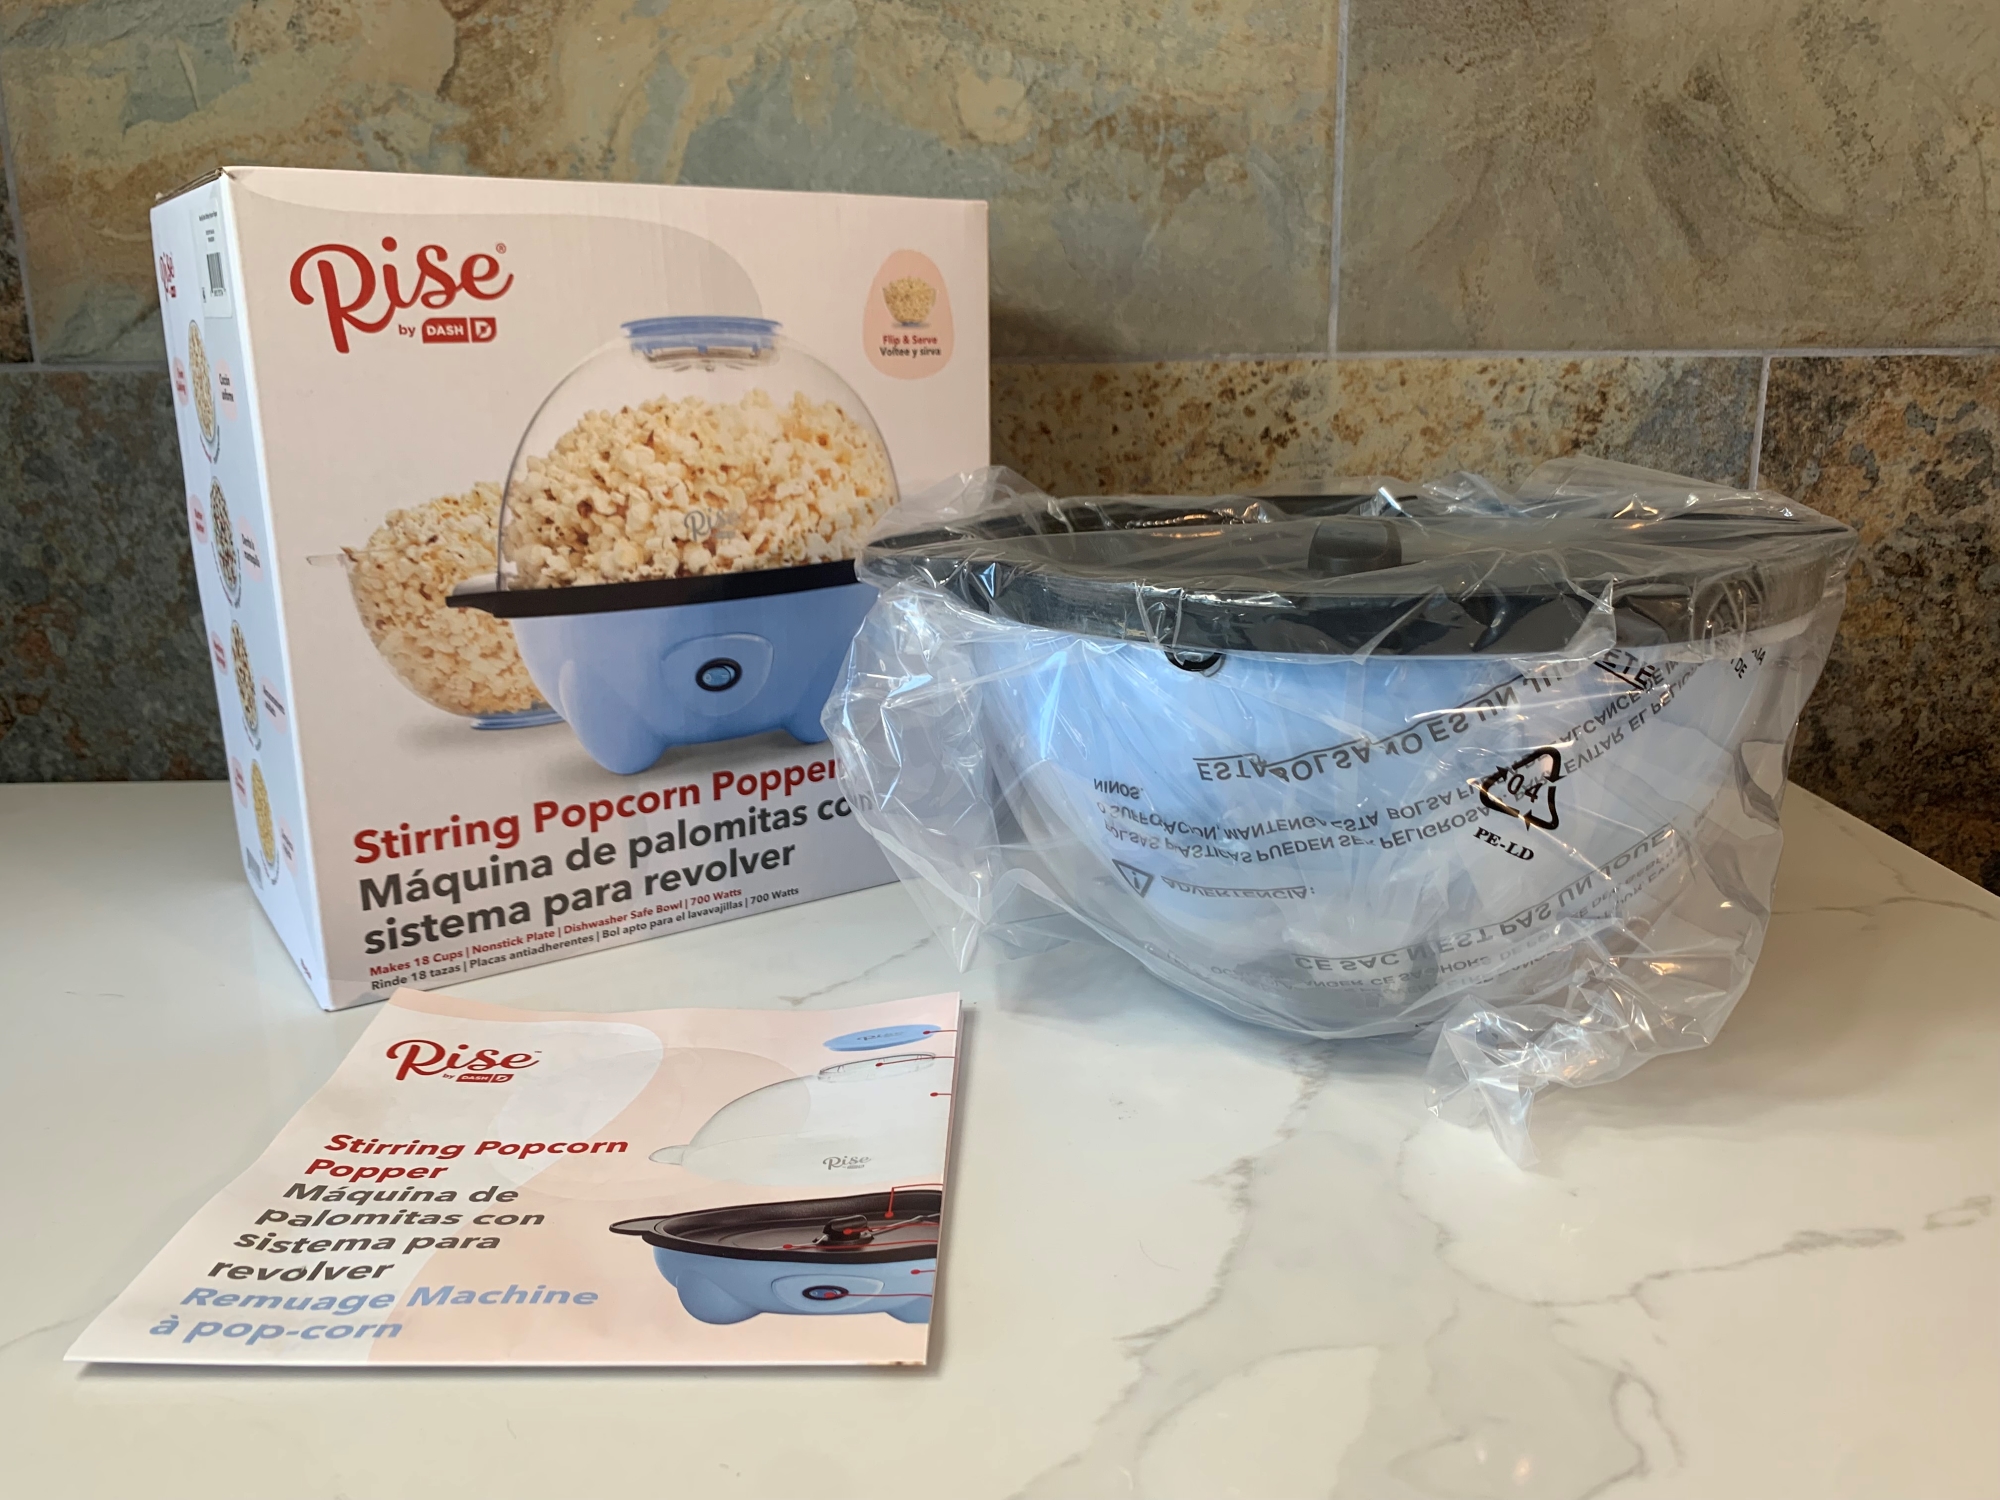 Dash Microwave Popcorn Popper - Aqua